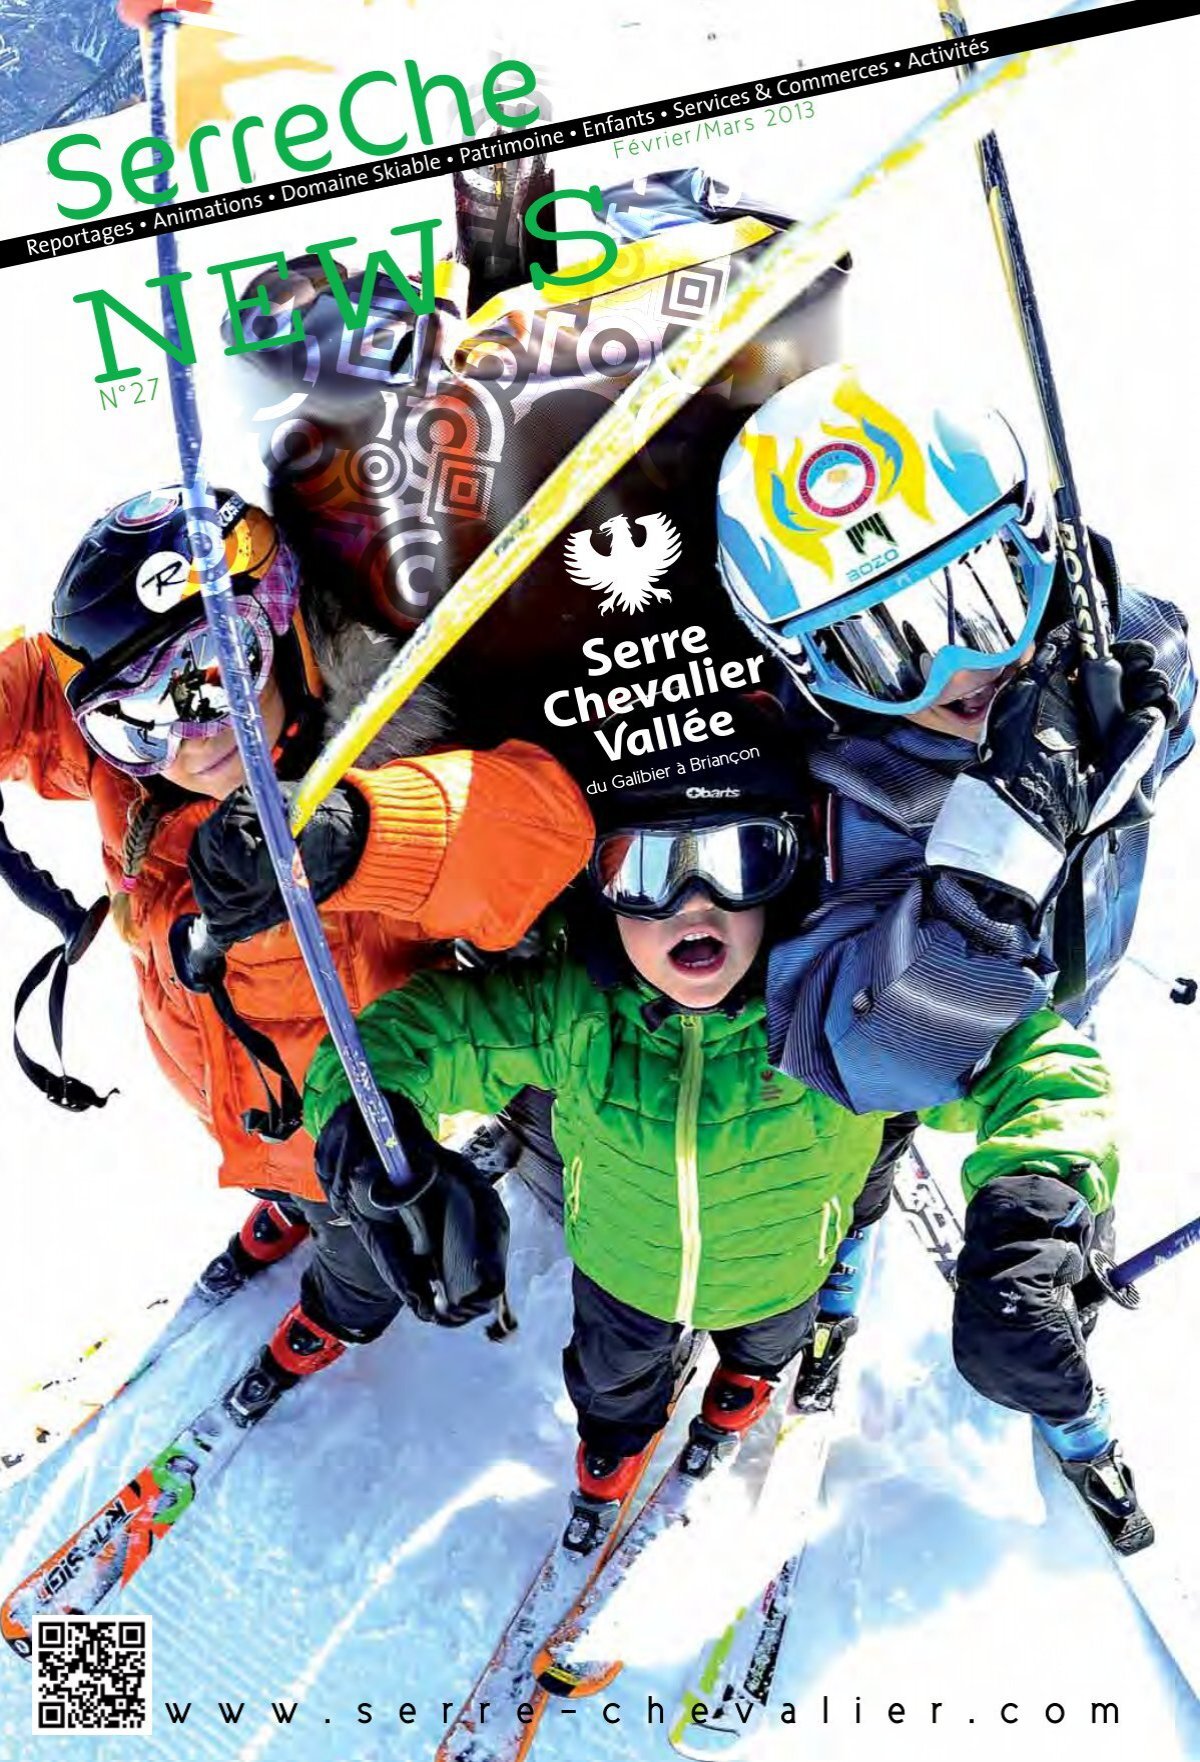 selection-polaire-ski - Le Blog de Néroli